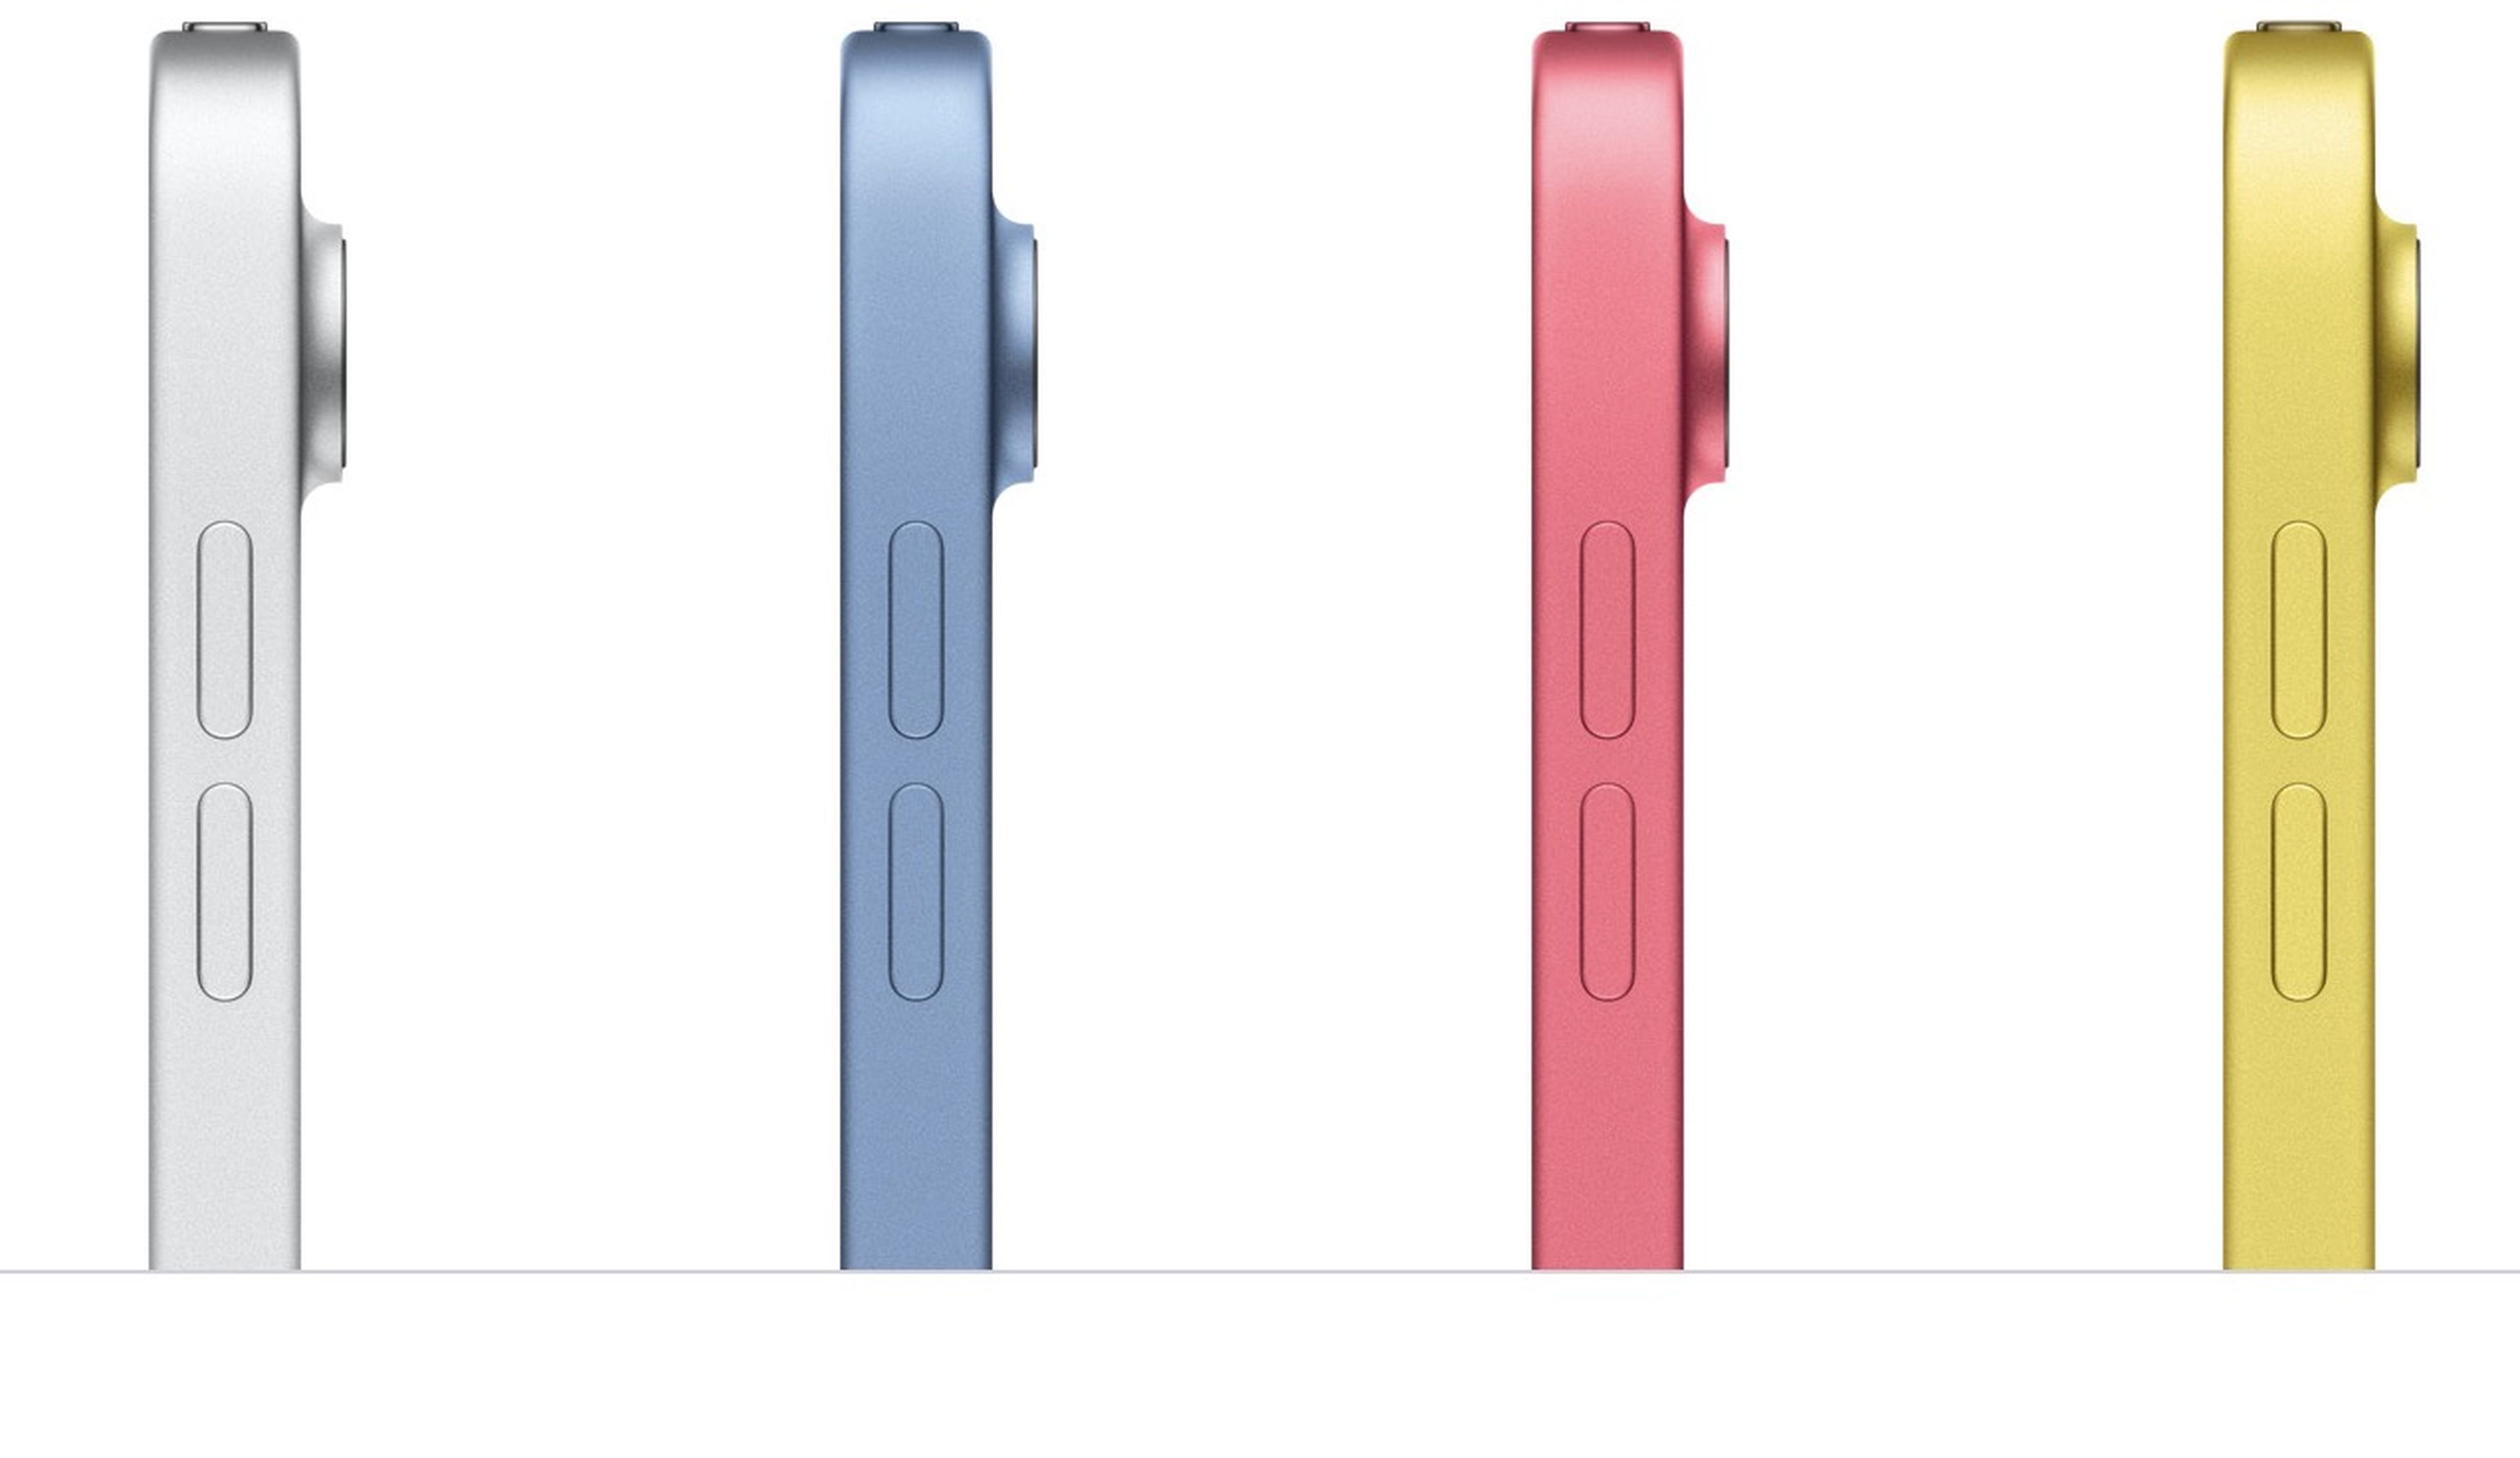 iPad mini colors